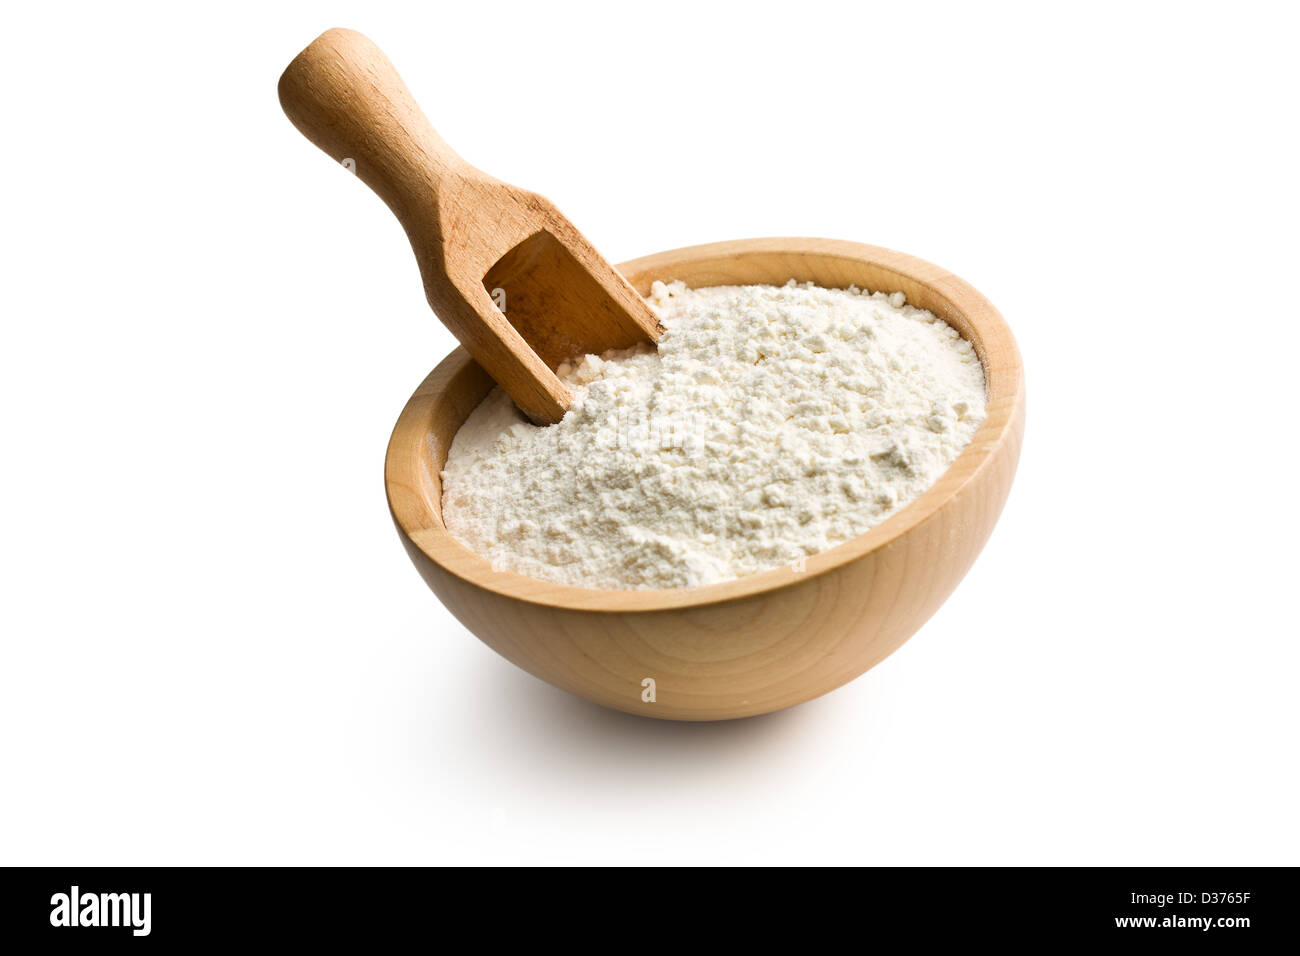 flour in wooden bowl on white background Stock Photo